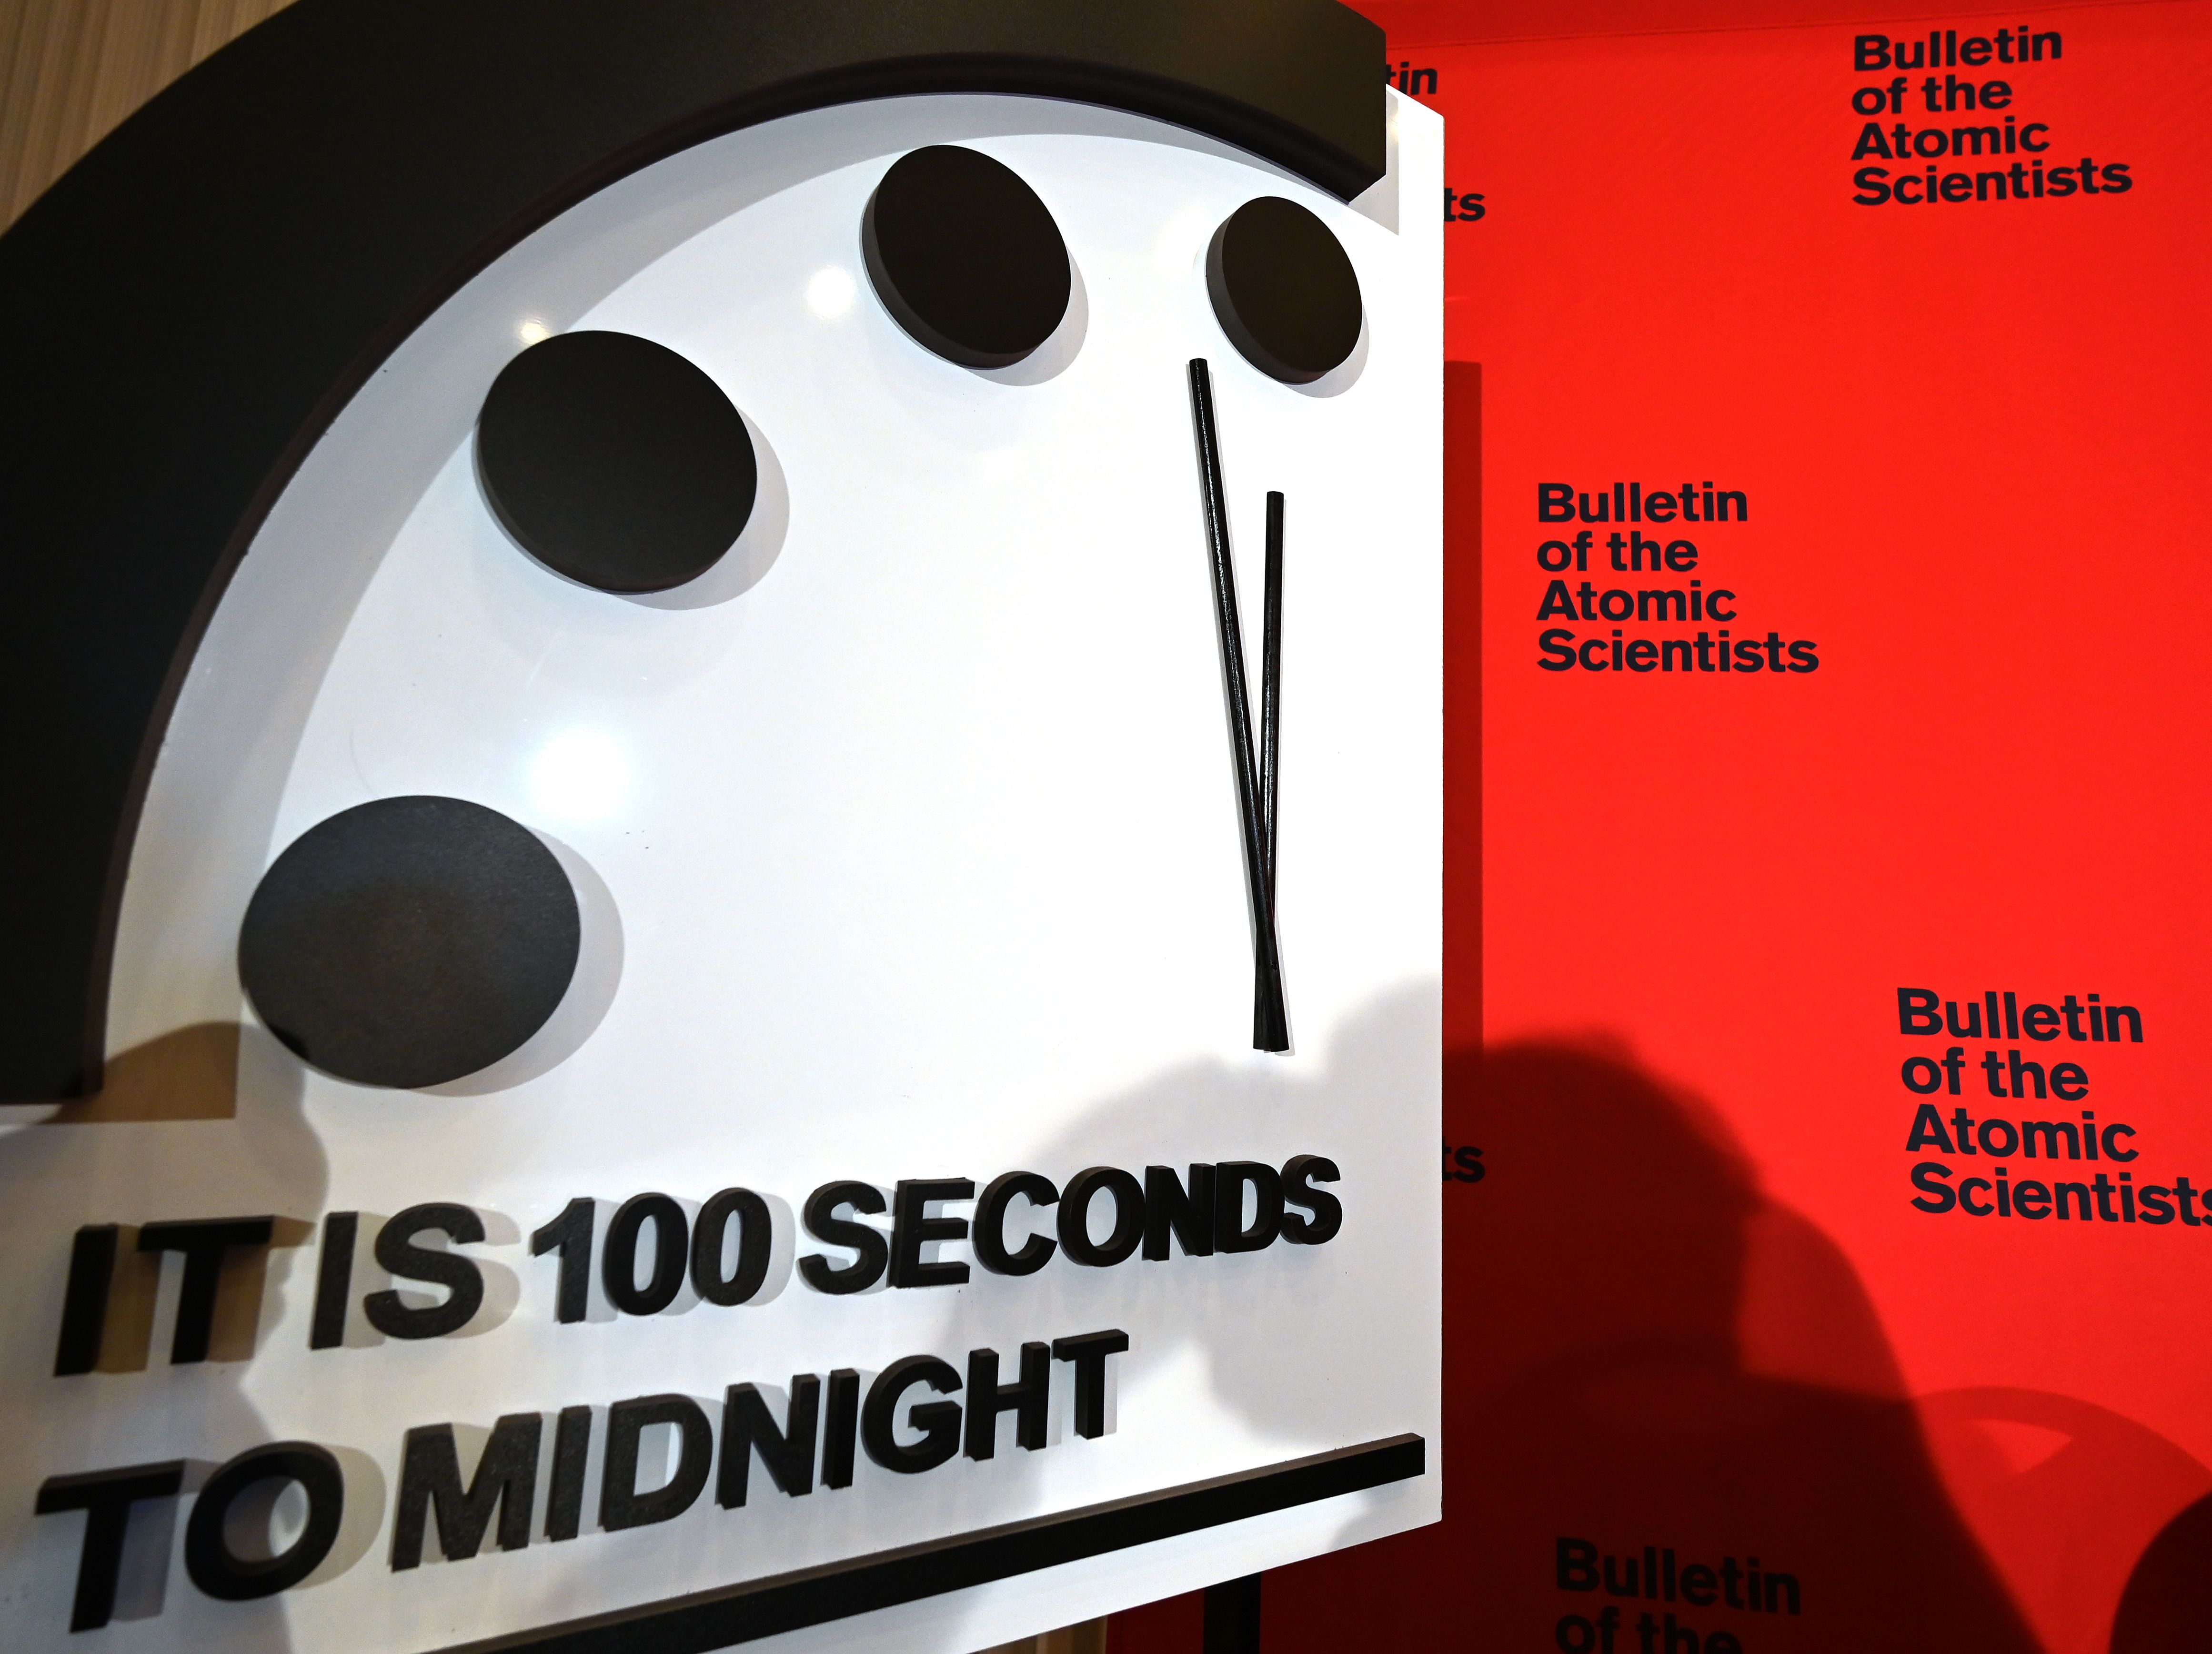 Сколько часов судного дня. СТО секунд до полуночи: часы Судного дня. Судные часы. Часы Судного дня 2020. Часы Судного дня 100 секунд.